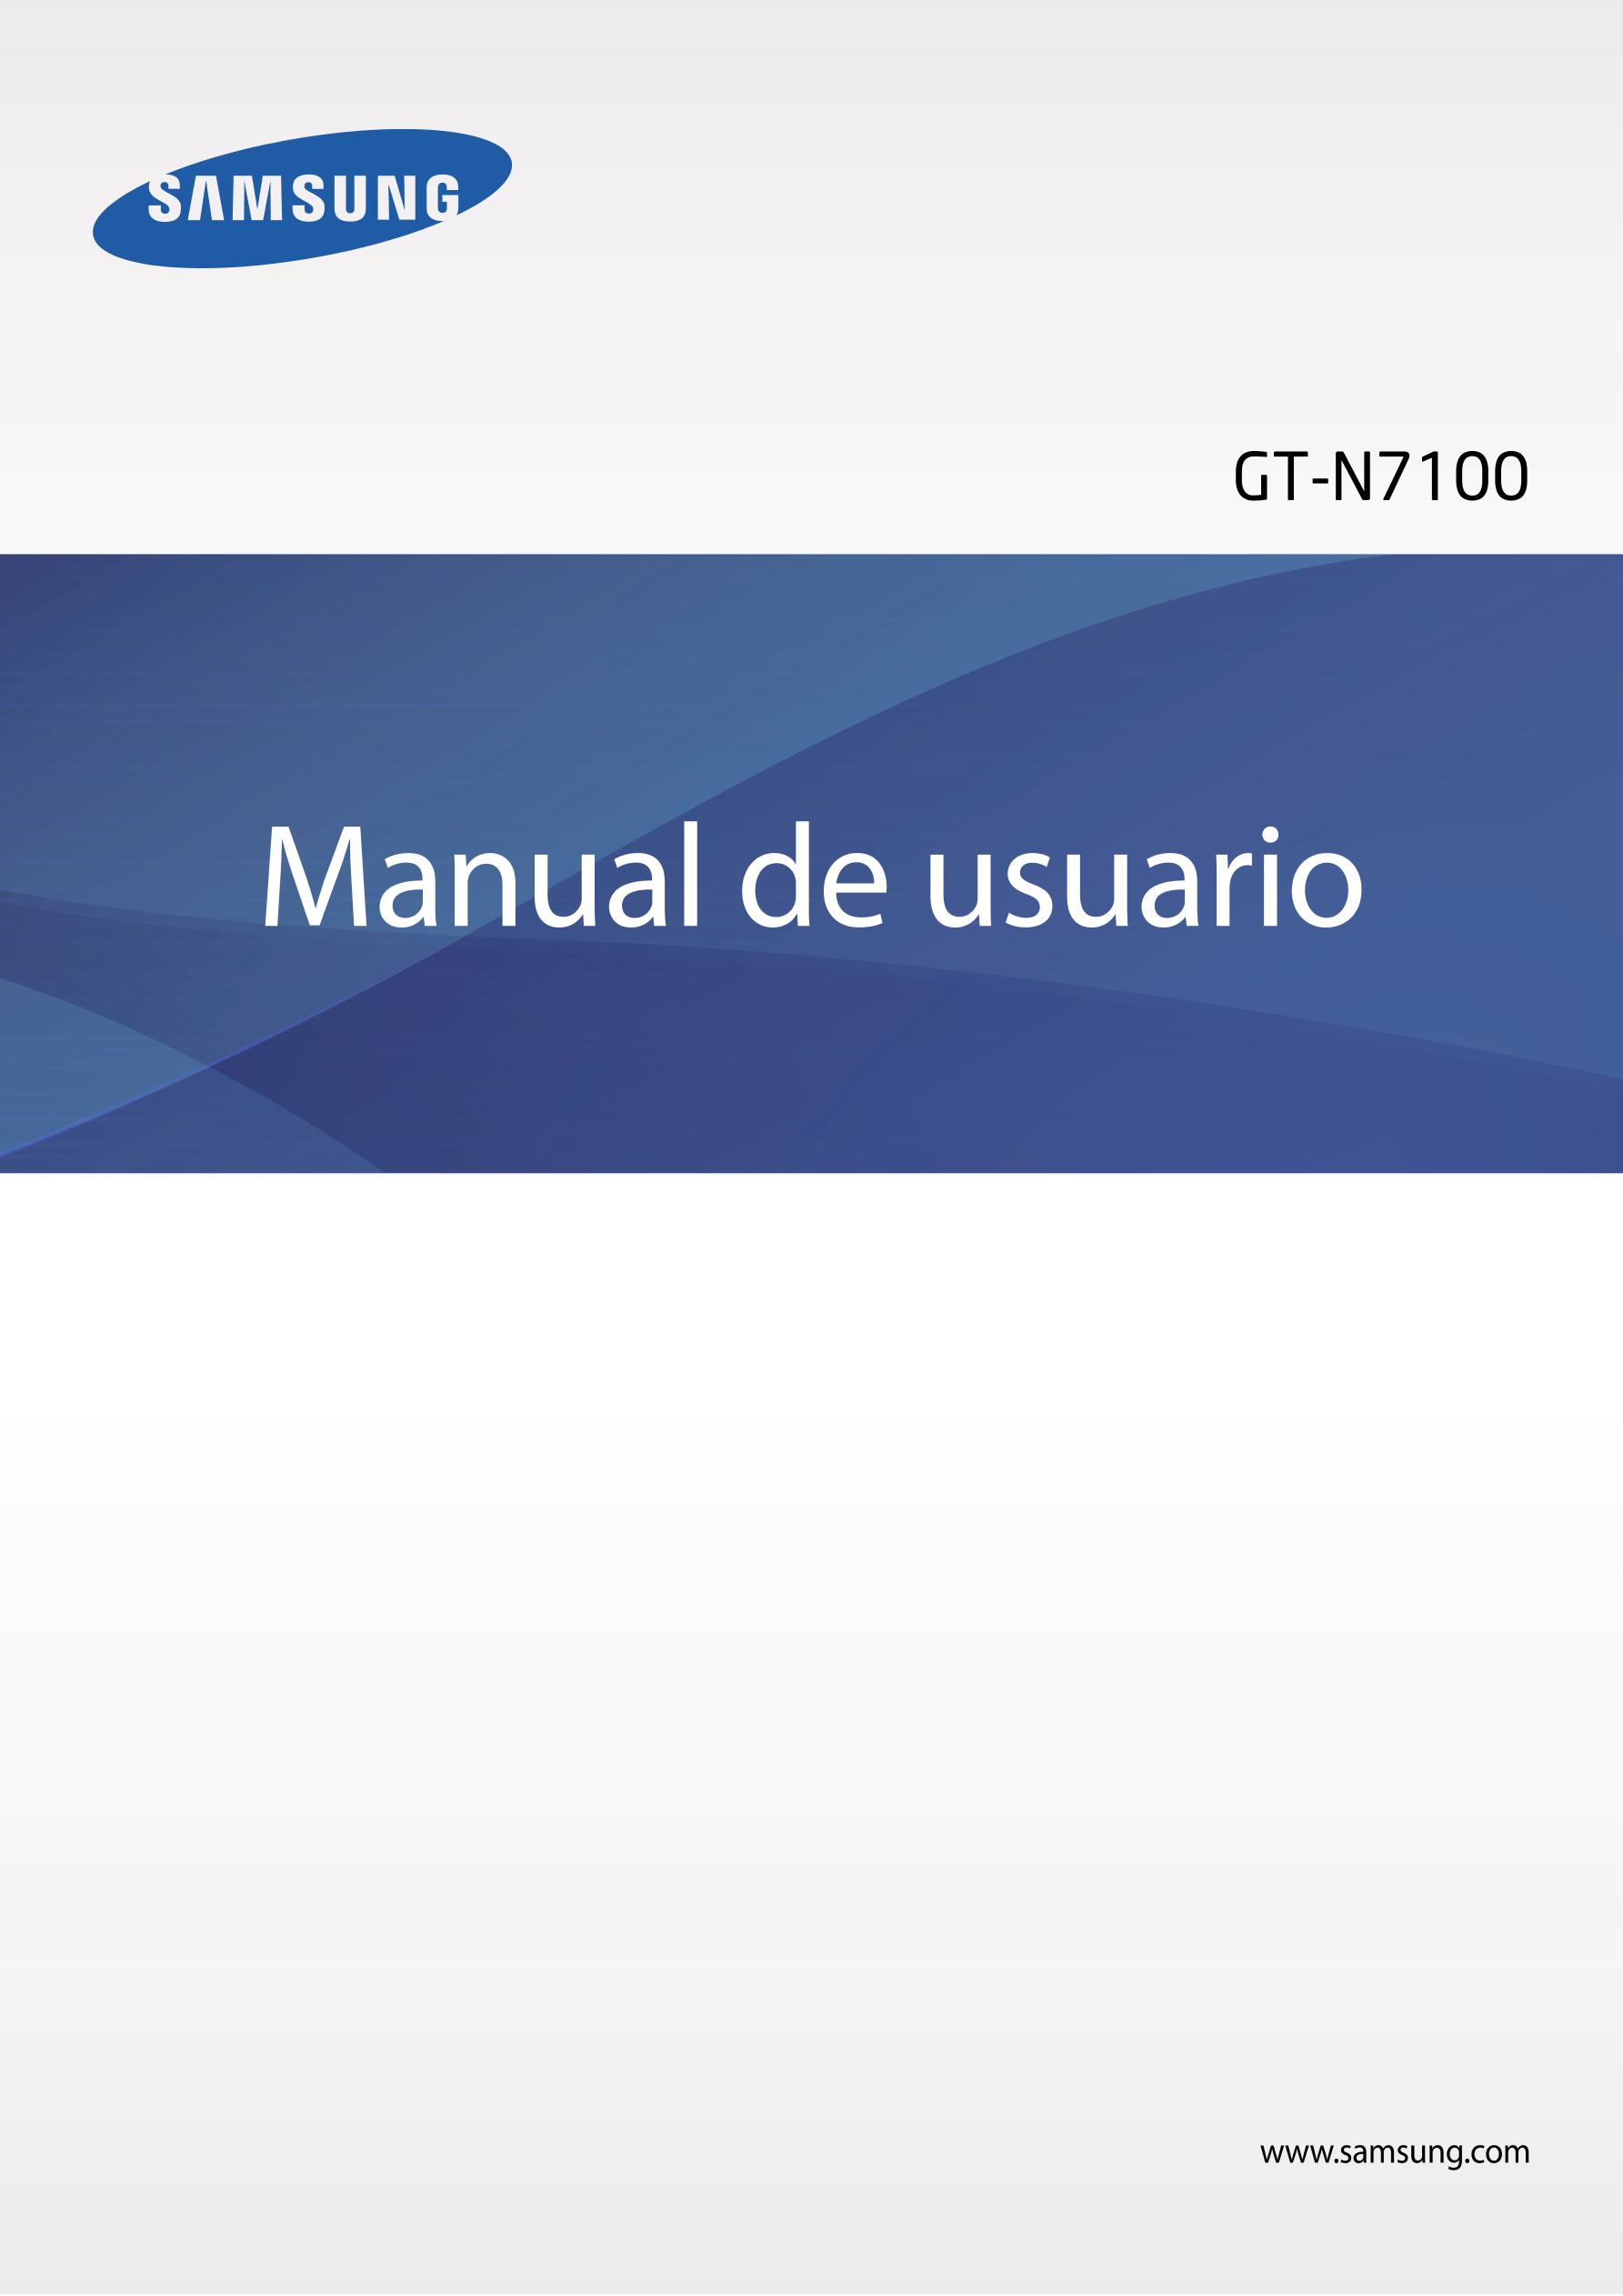 GT-N7100
Manual de usuario
www.samsung.com